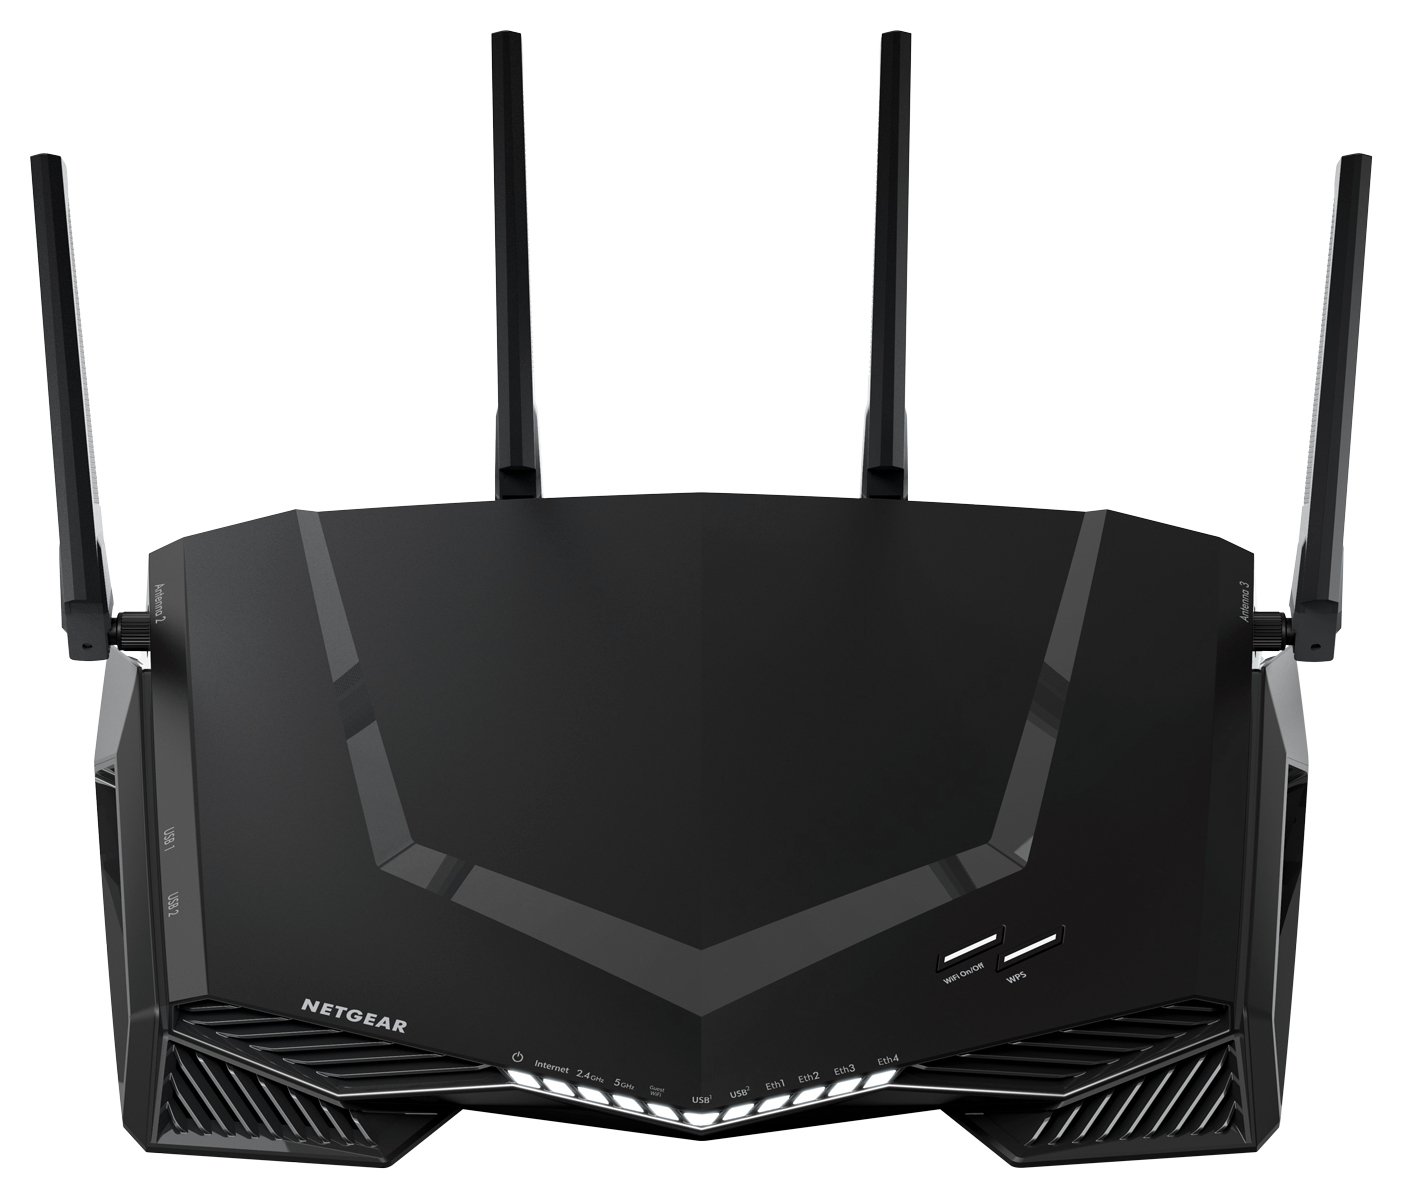 Netgear XR500 Nighthawk Pro Gaming Wi-Fi Router Review